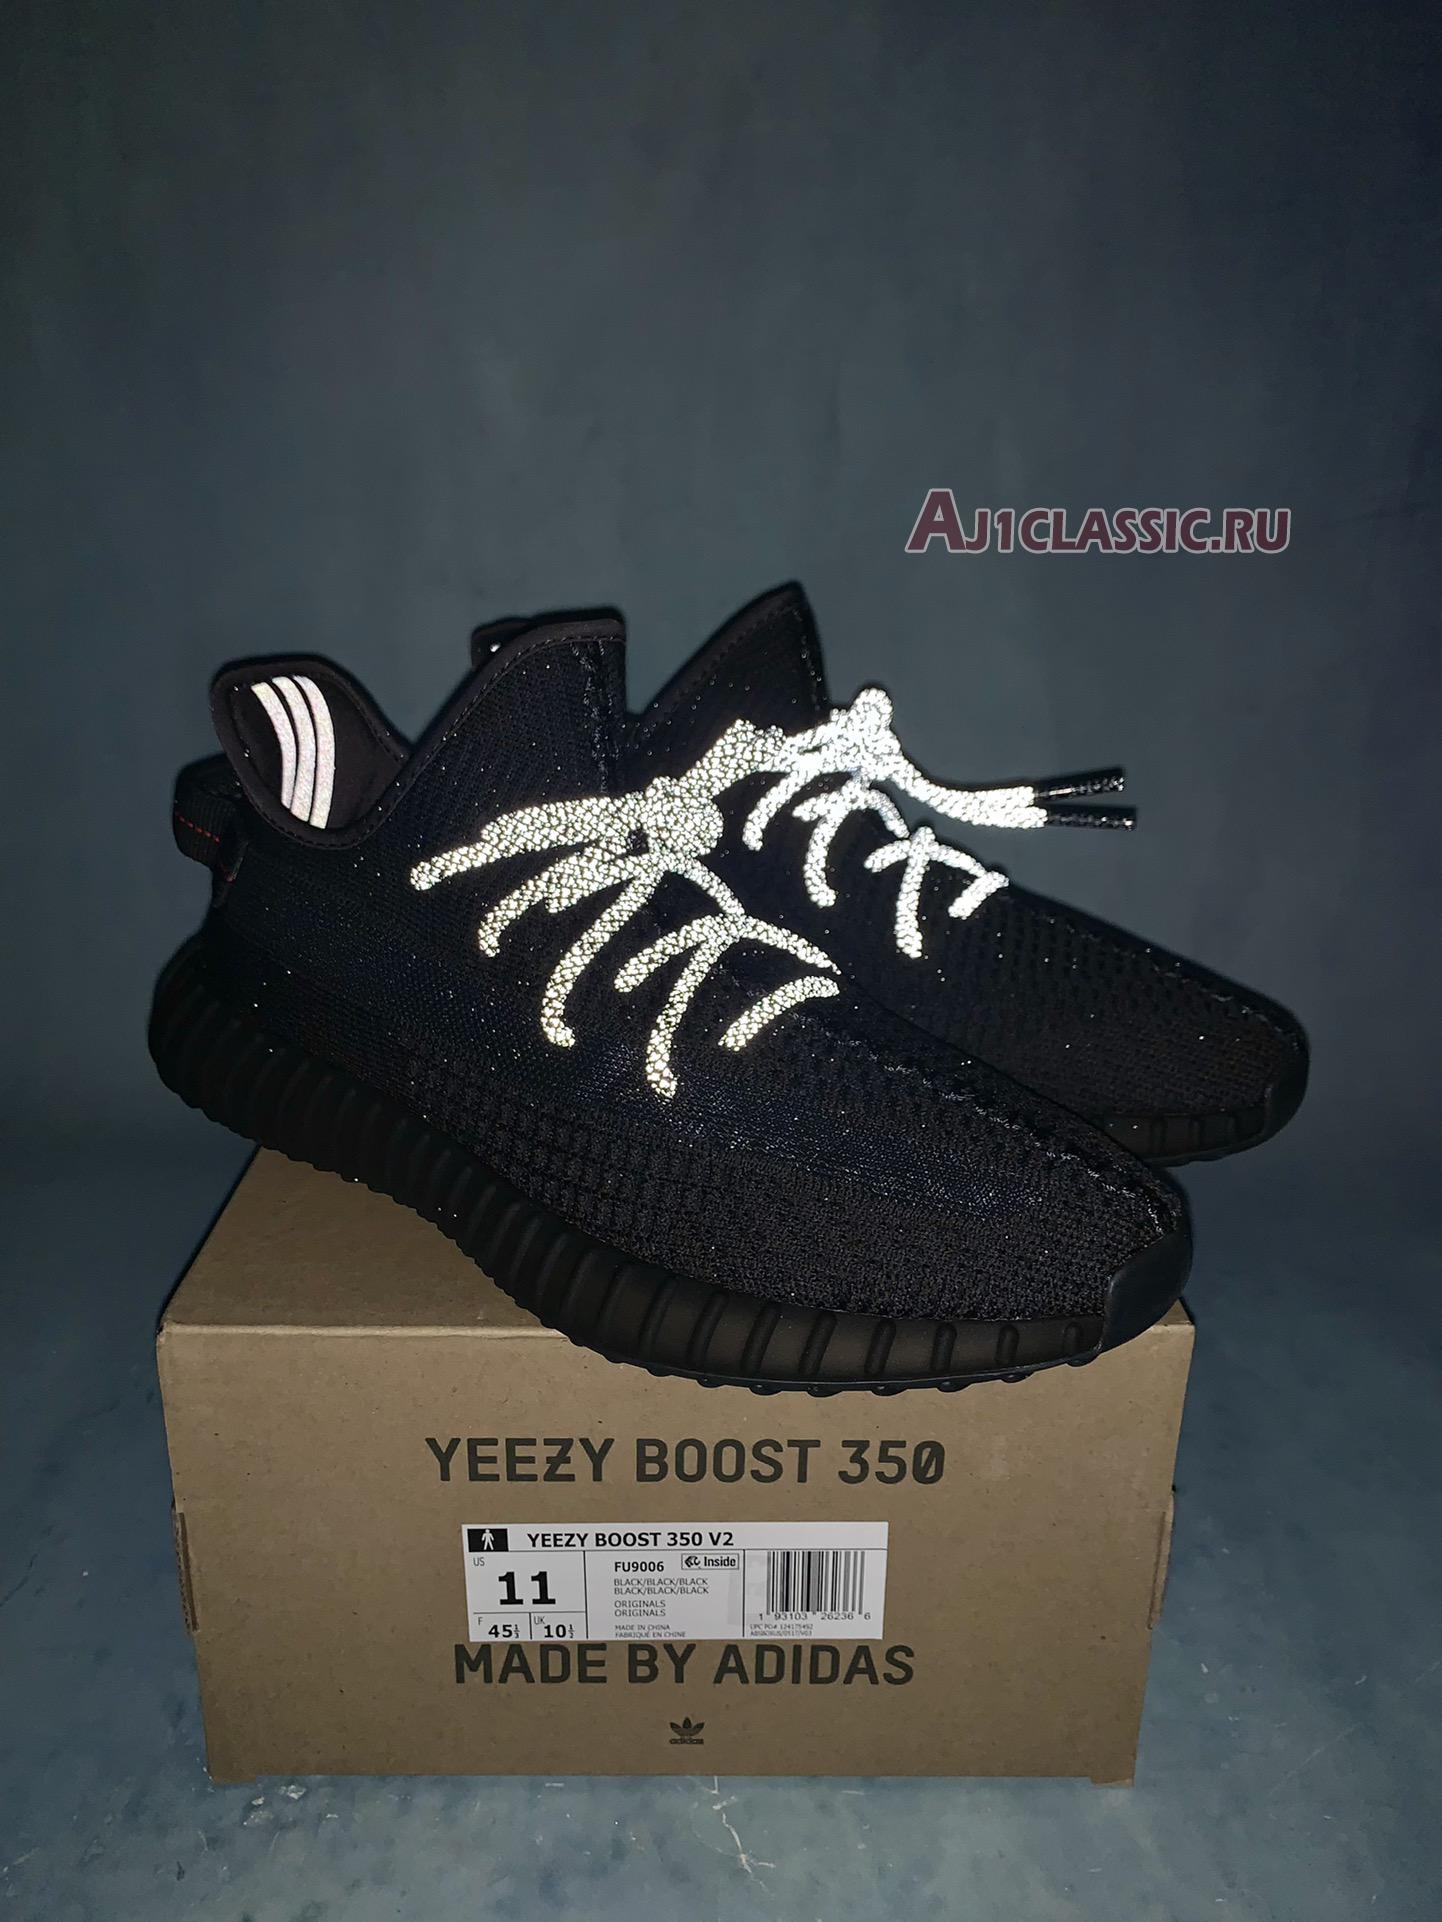 Adidas Yeezy Boost 350 V2 "Black Non-Reflective" FU9006-2